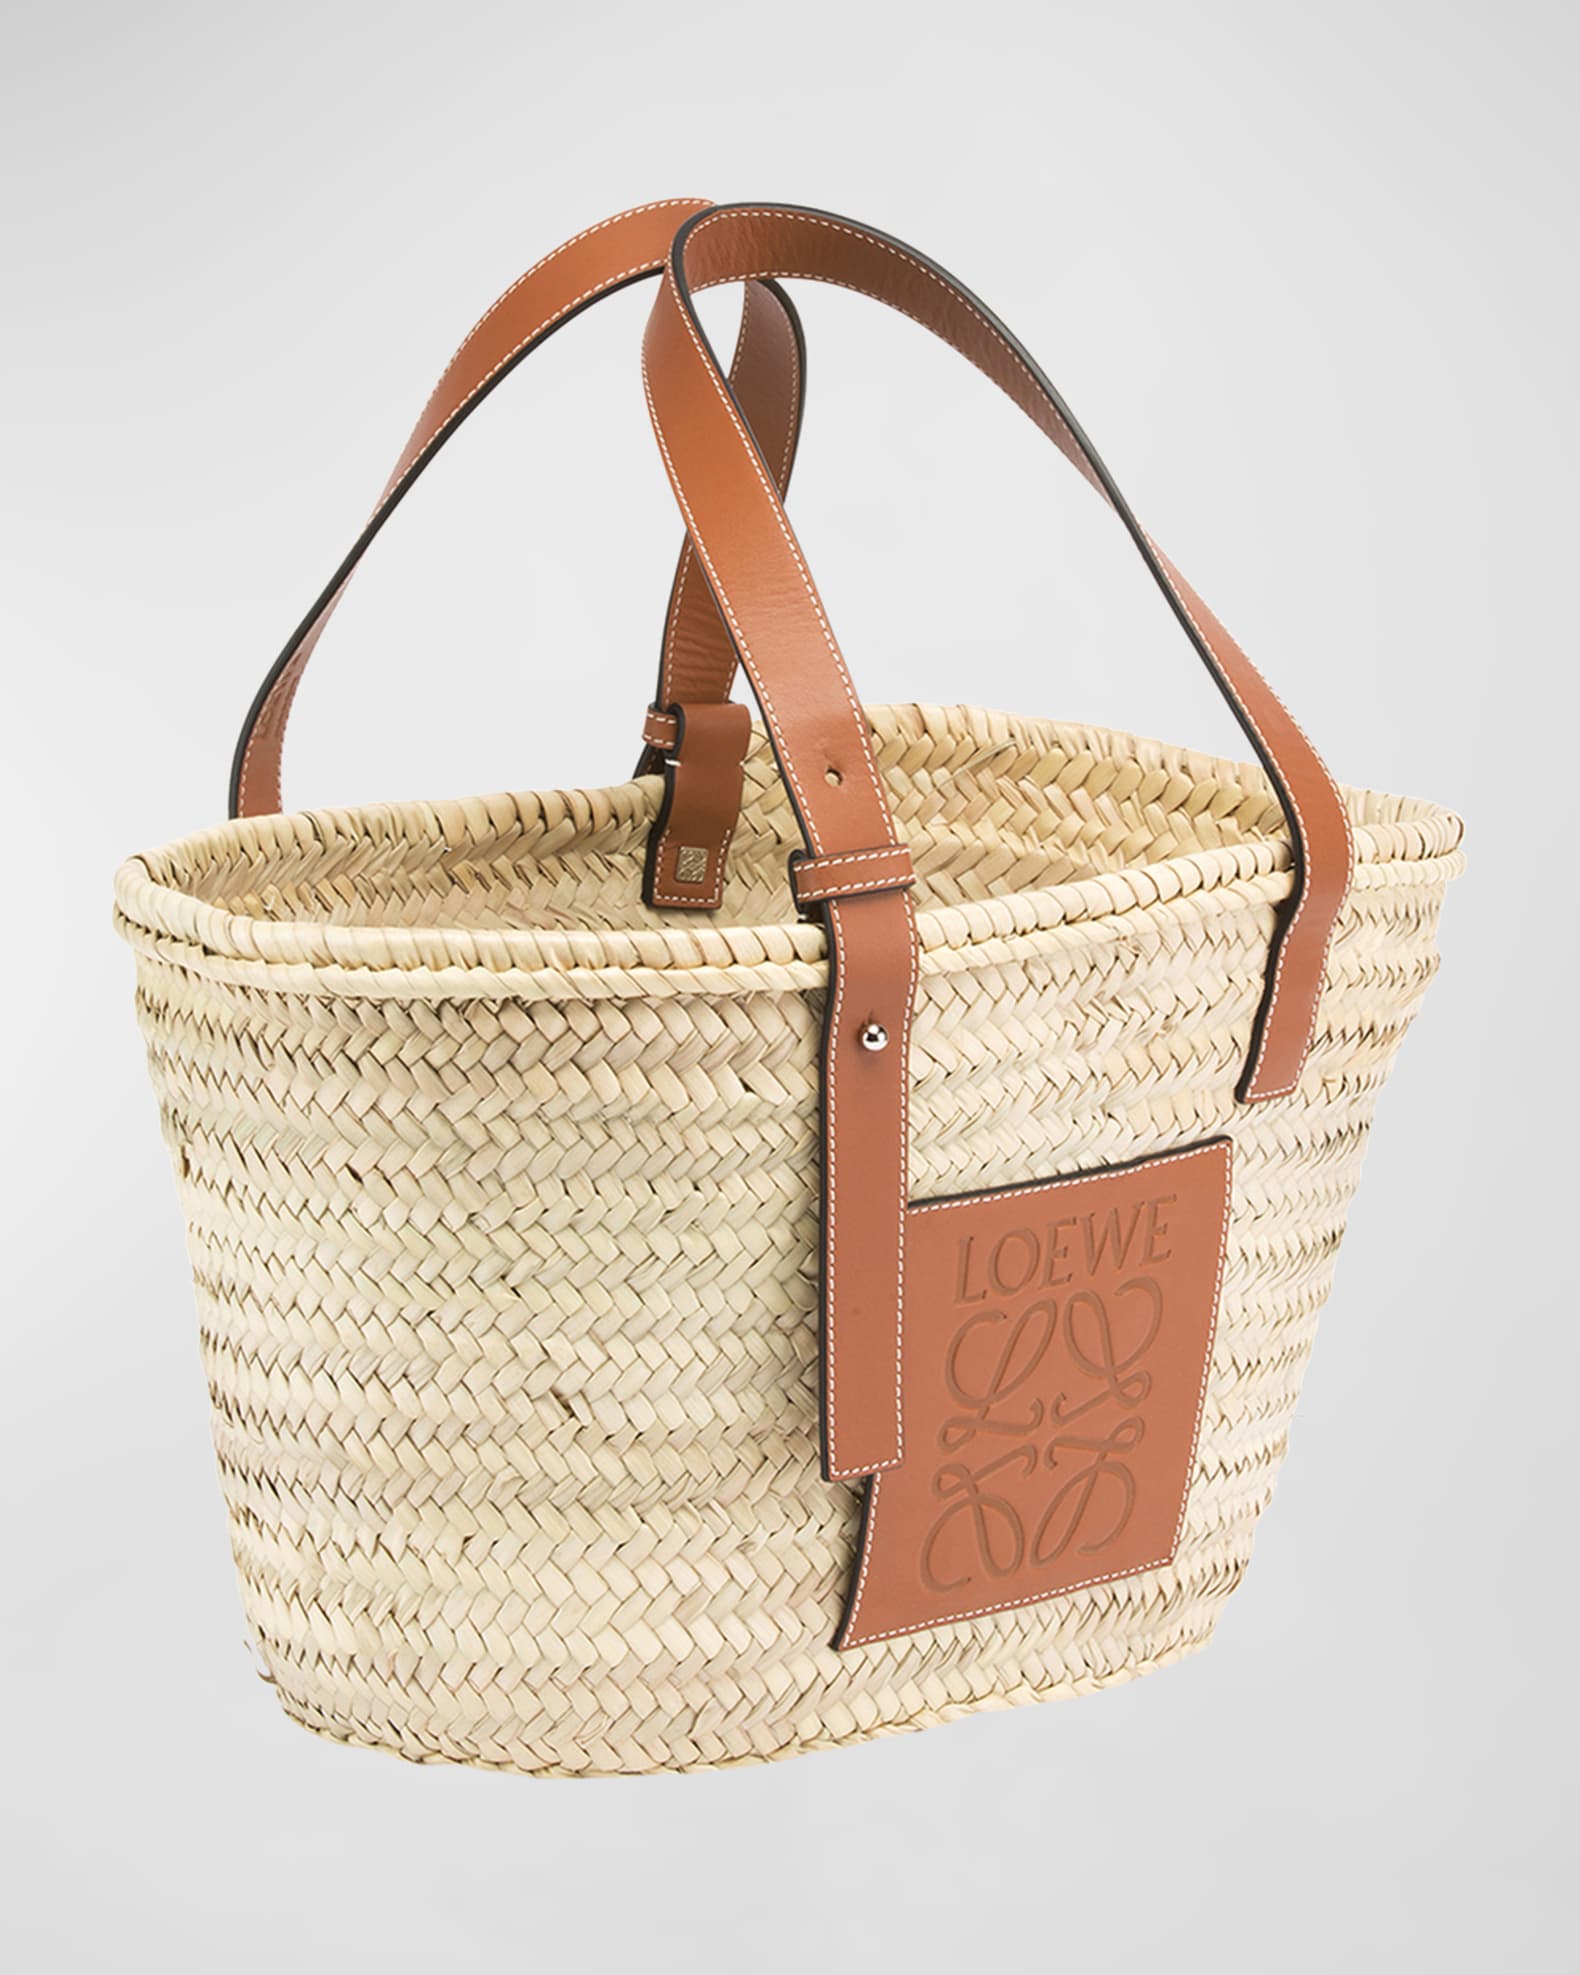 Loewe Small Basket Tote Bag